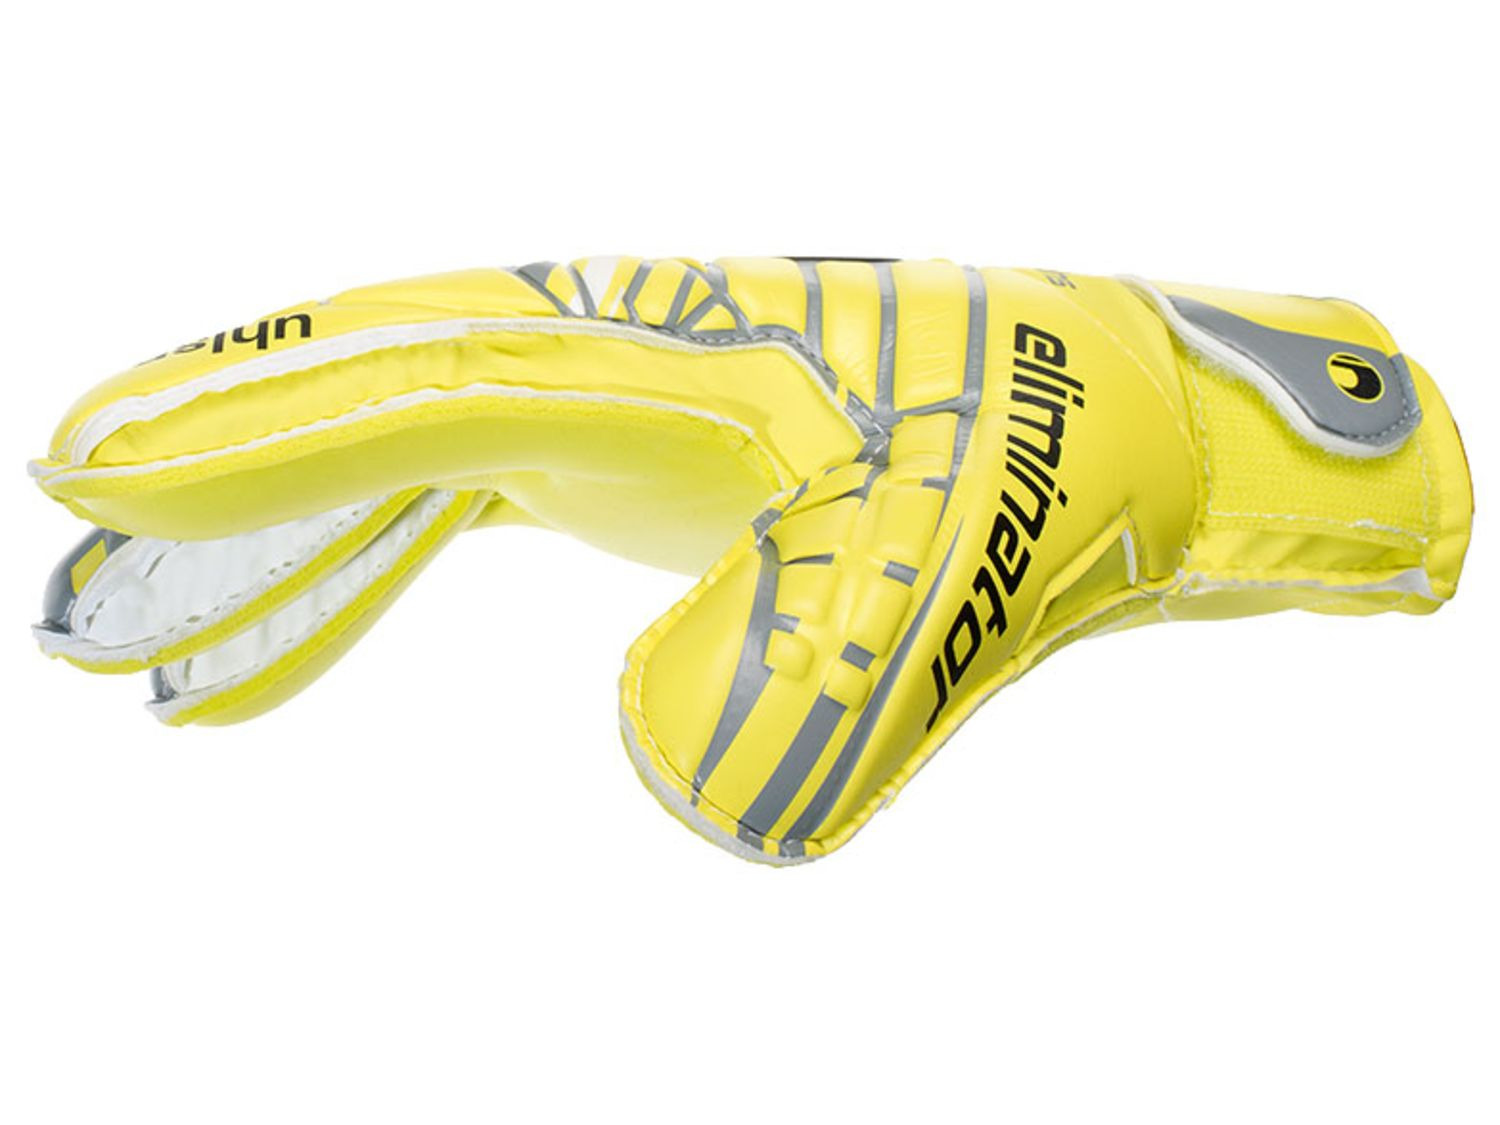 Uhlsport Eliminator Unlimited Soft Pro Torwart Handschuhe 101103201 gelb neu 